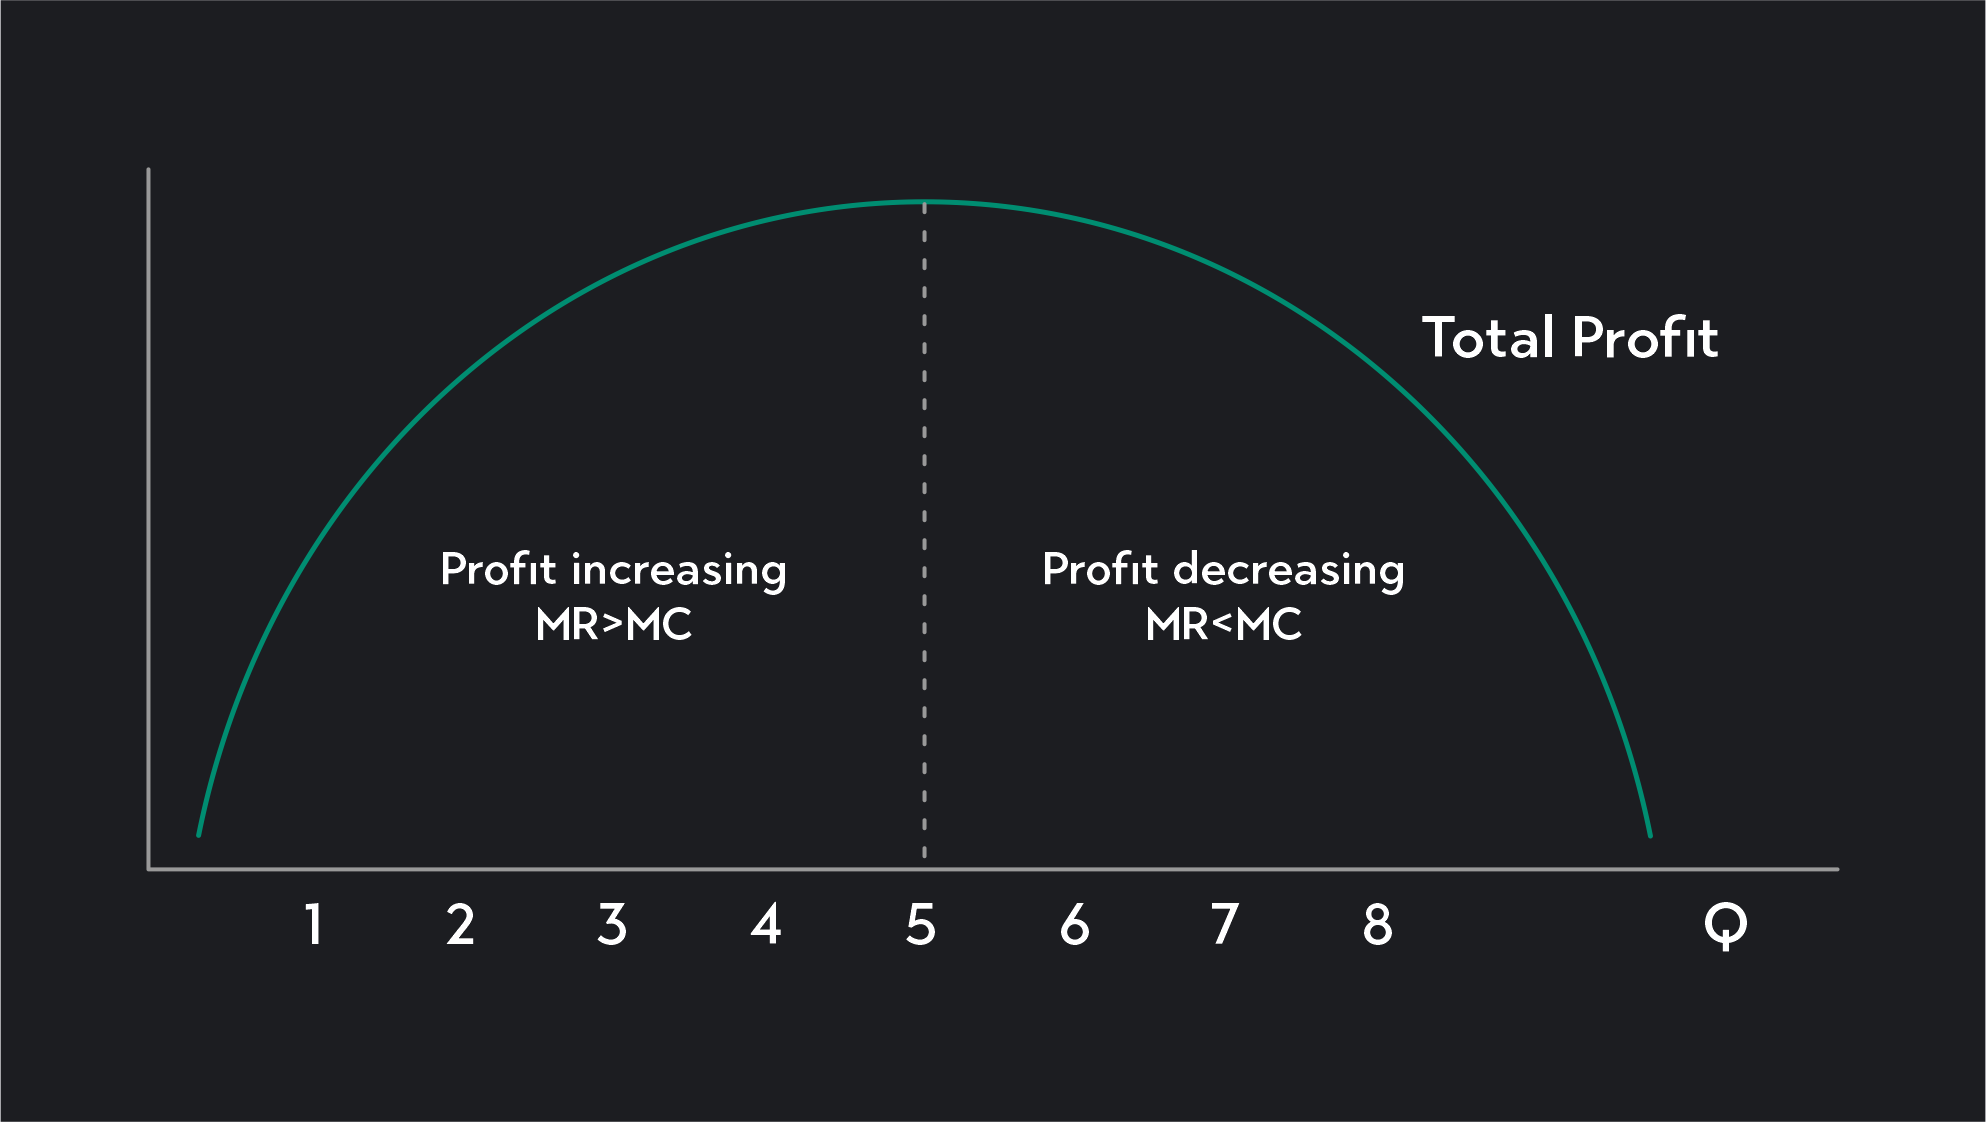 Graph showing total profit with profit increasing (MR >MC) and profit decreasing (MR<MC).